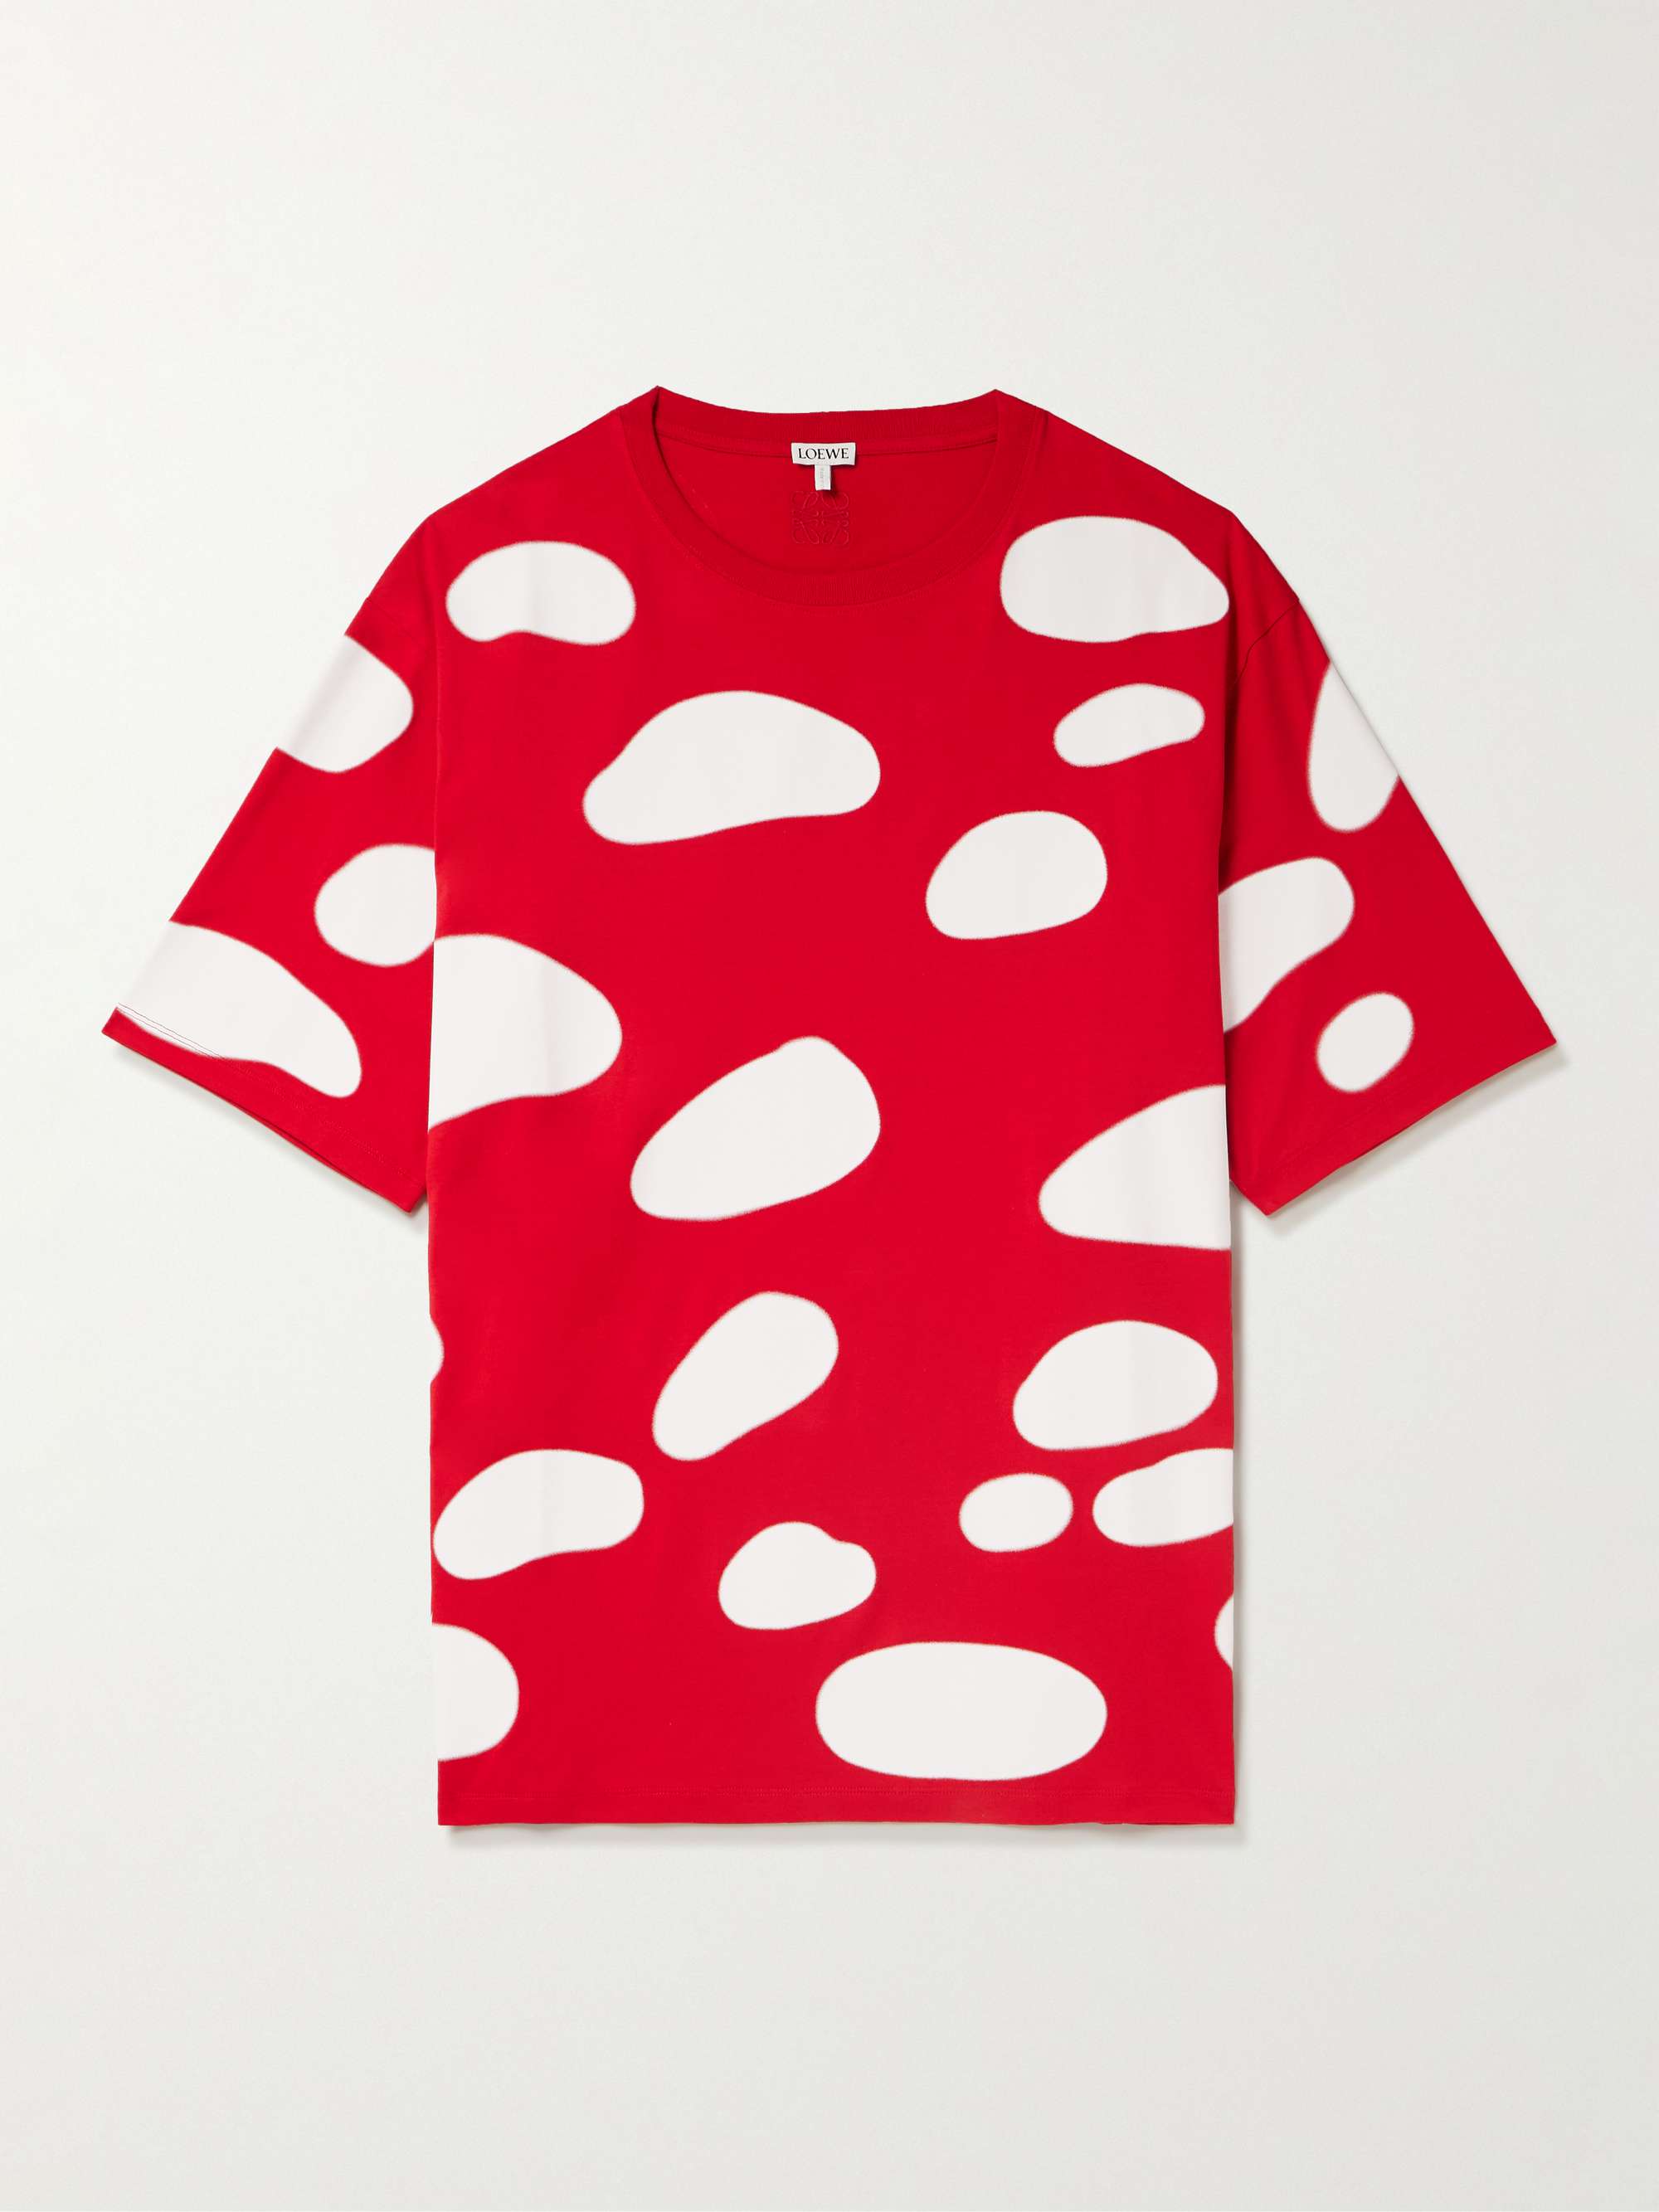 Loewe - Men - Oversized Printed Cotton-jersey T-Shirt Red - L